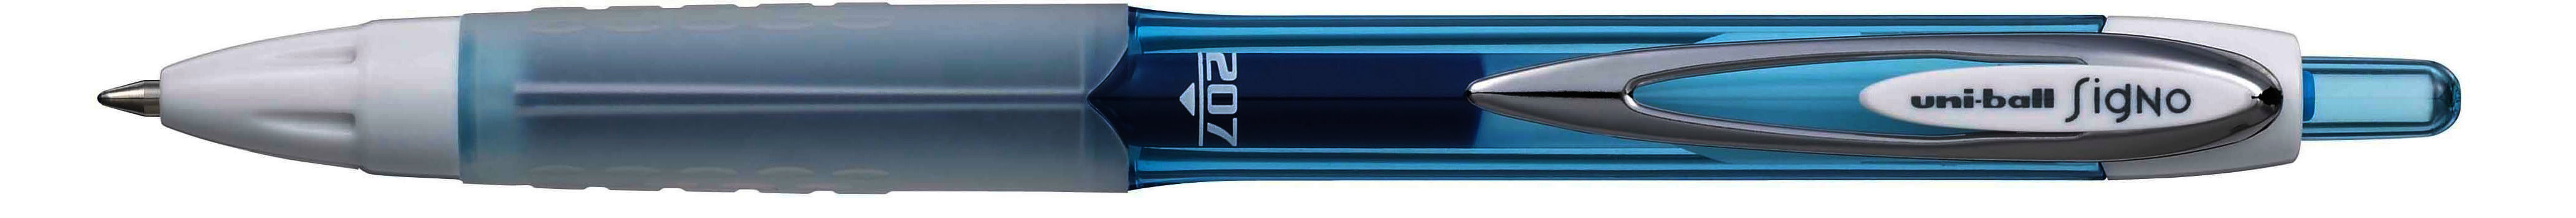 Bolígrafo Uni Signo Fancy Colors azul claro UMN-207F